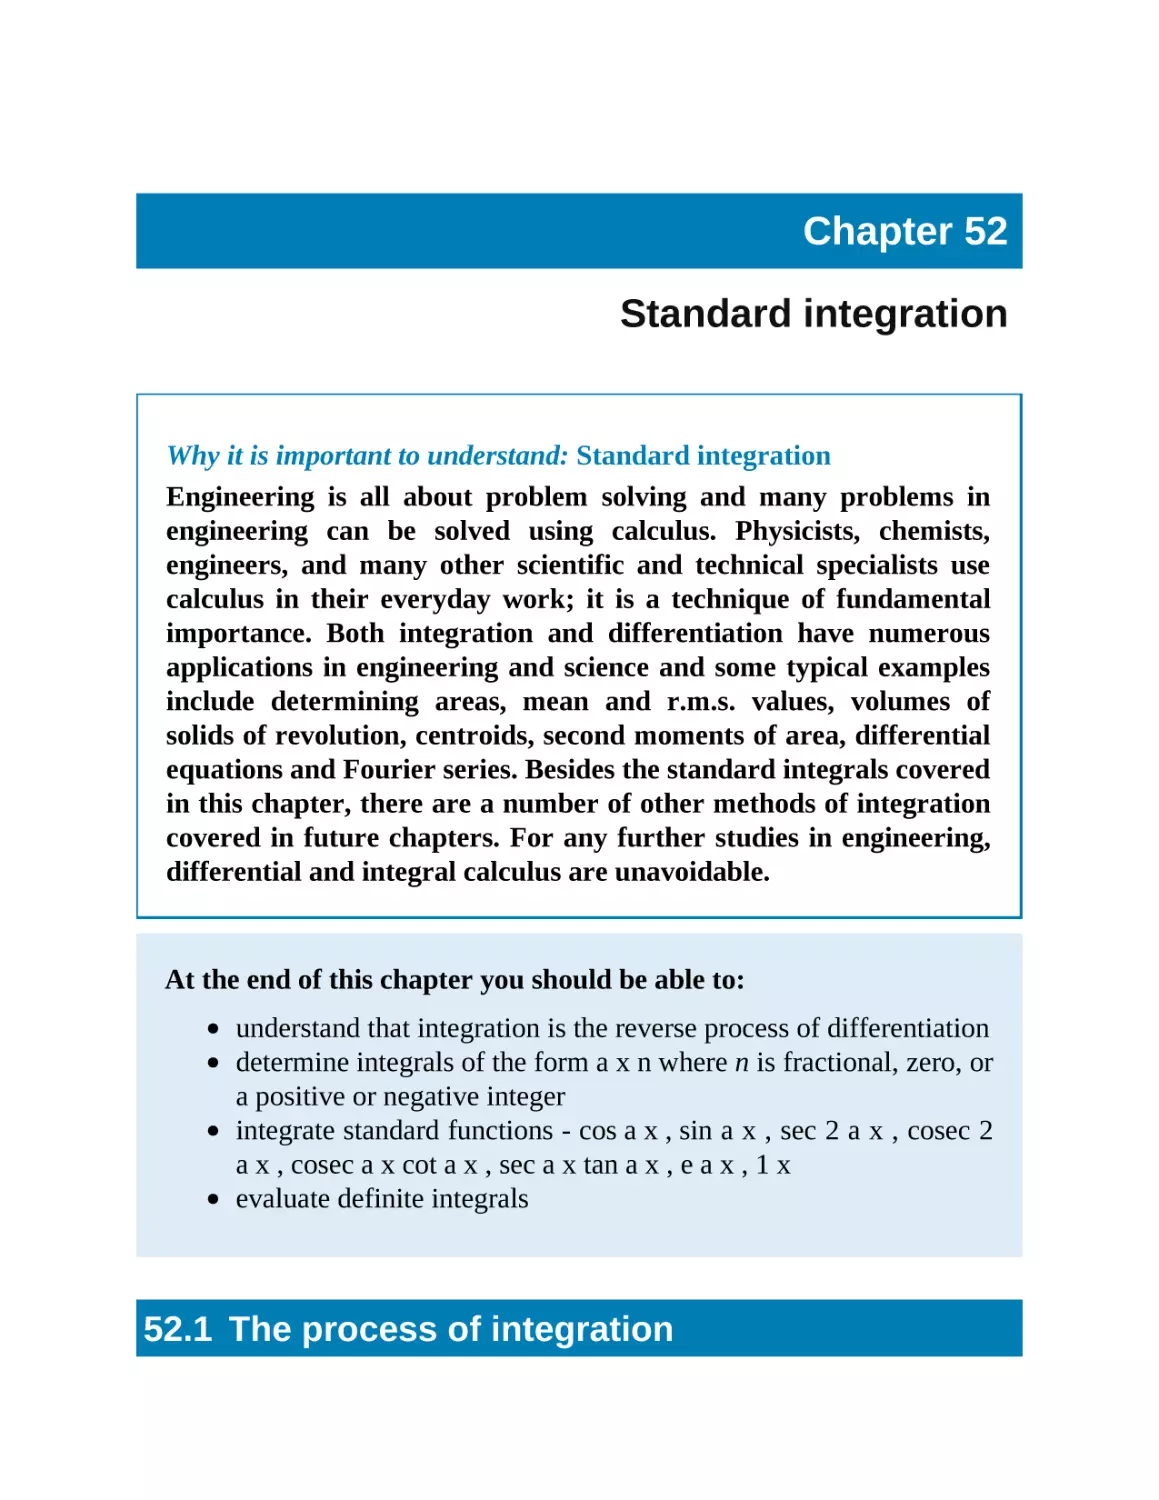 52 Standard integration
52.1 The process of integration